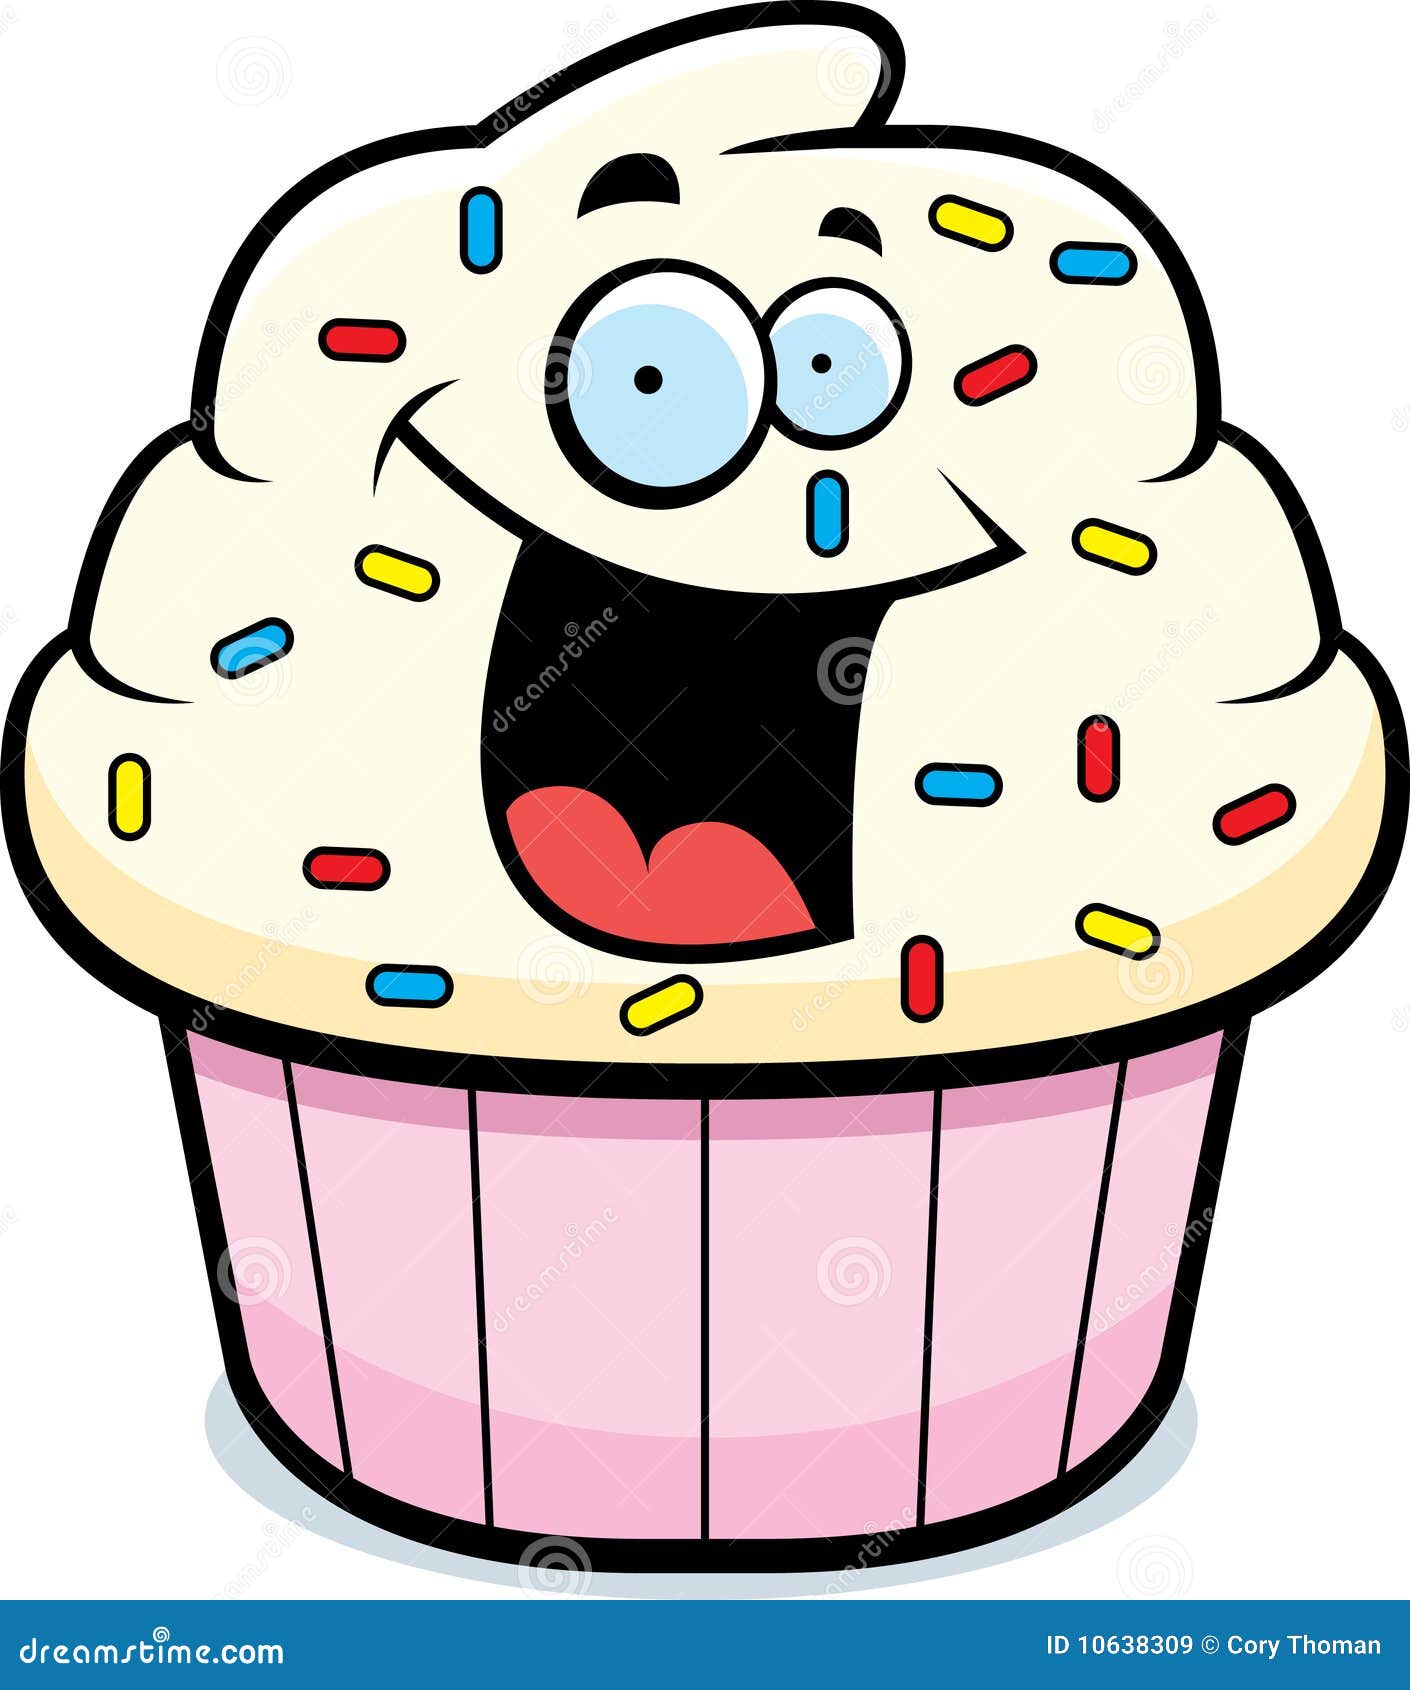 Cupcake Smiling stock vector. Illustration of cartoon ...